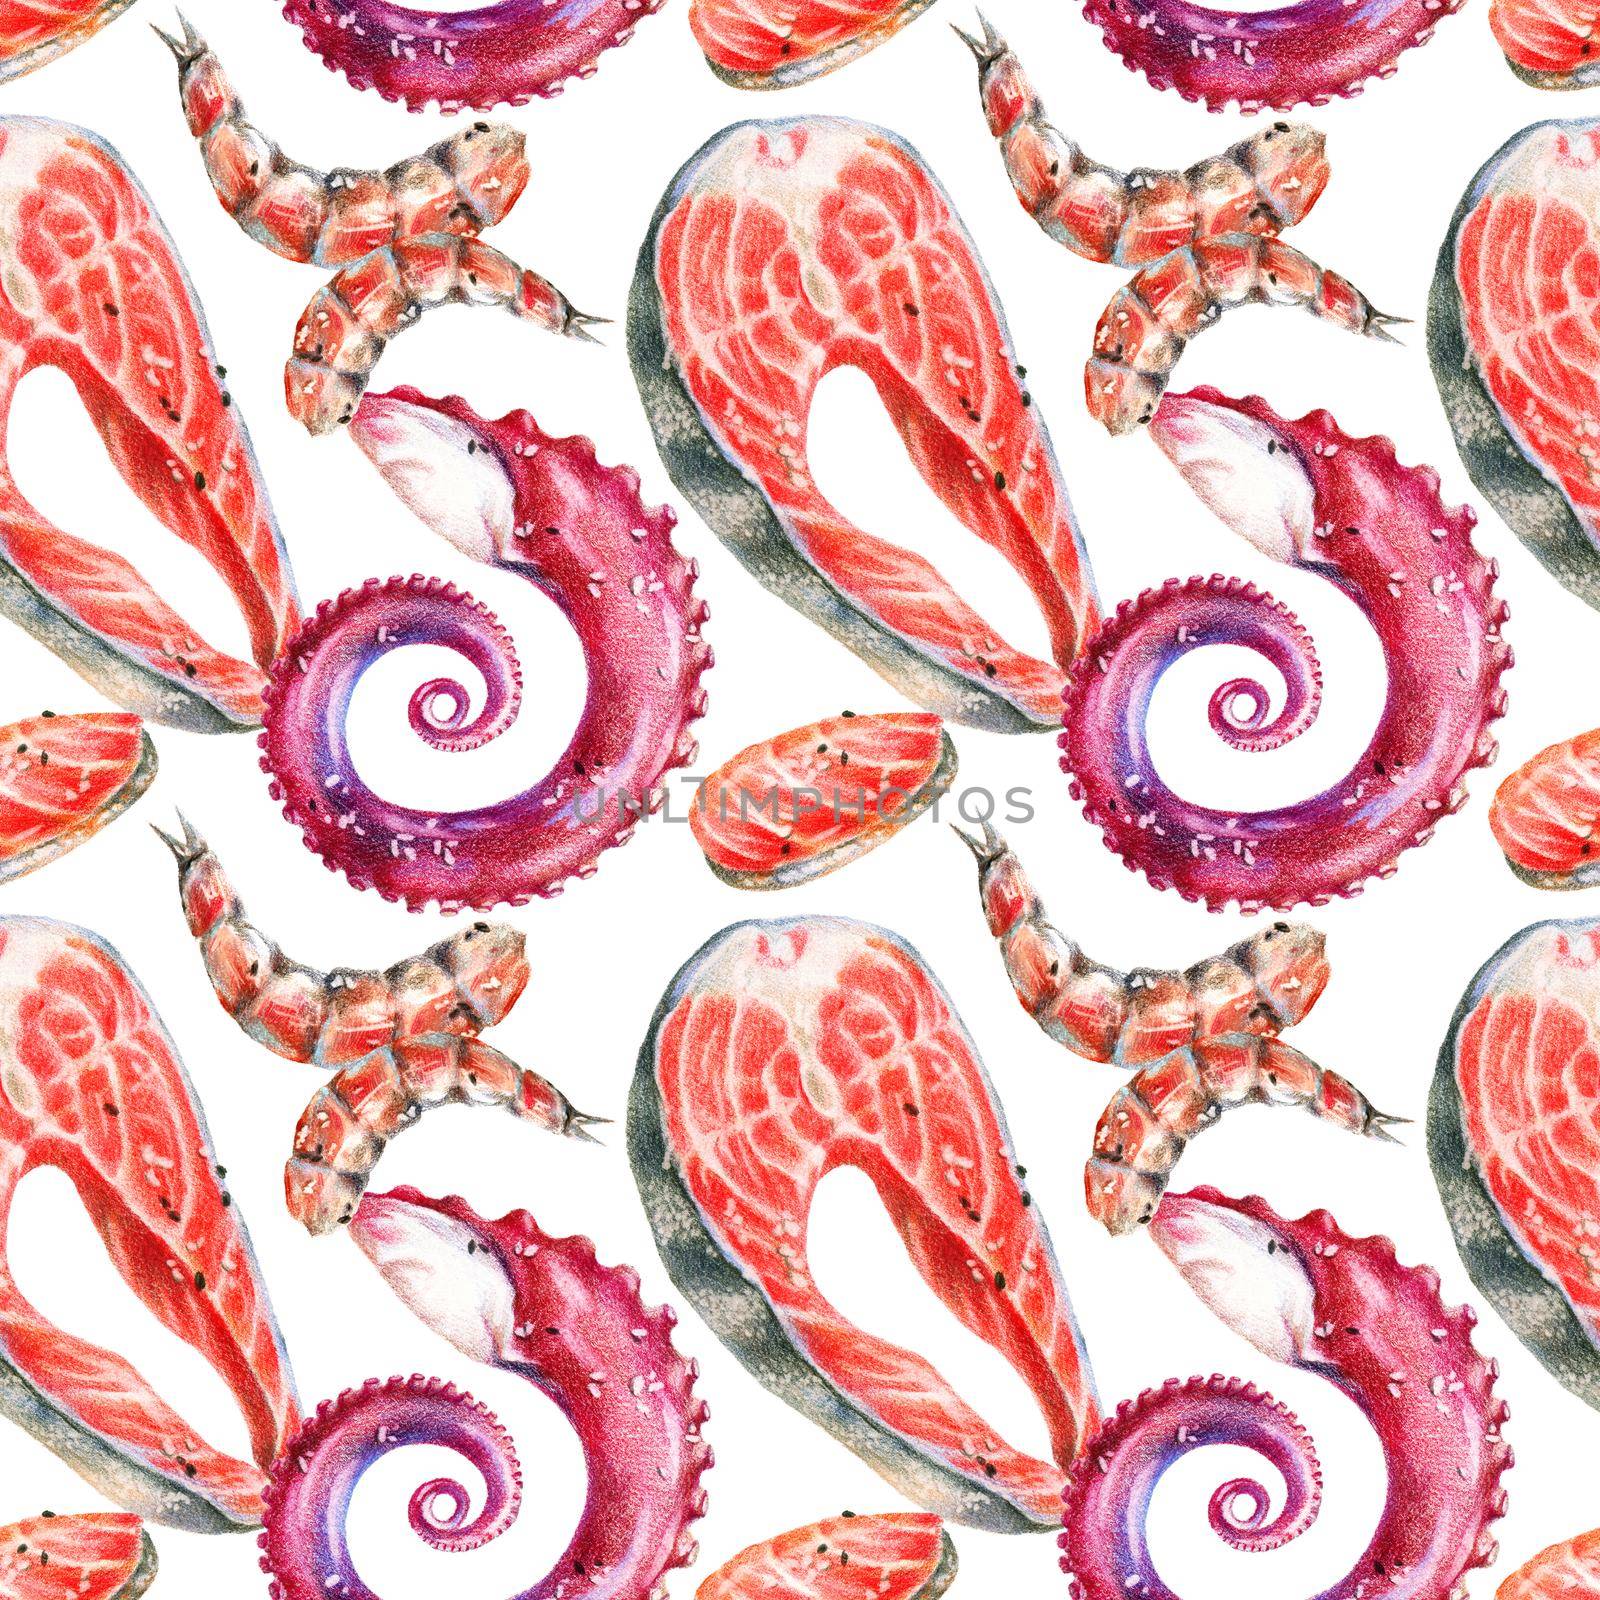 Color pencils illustration of seafood by Olatarakanova